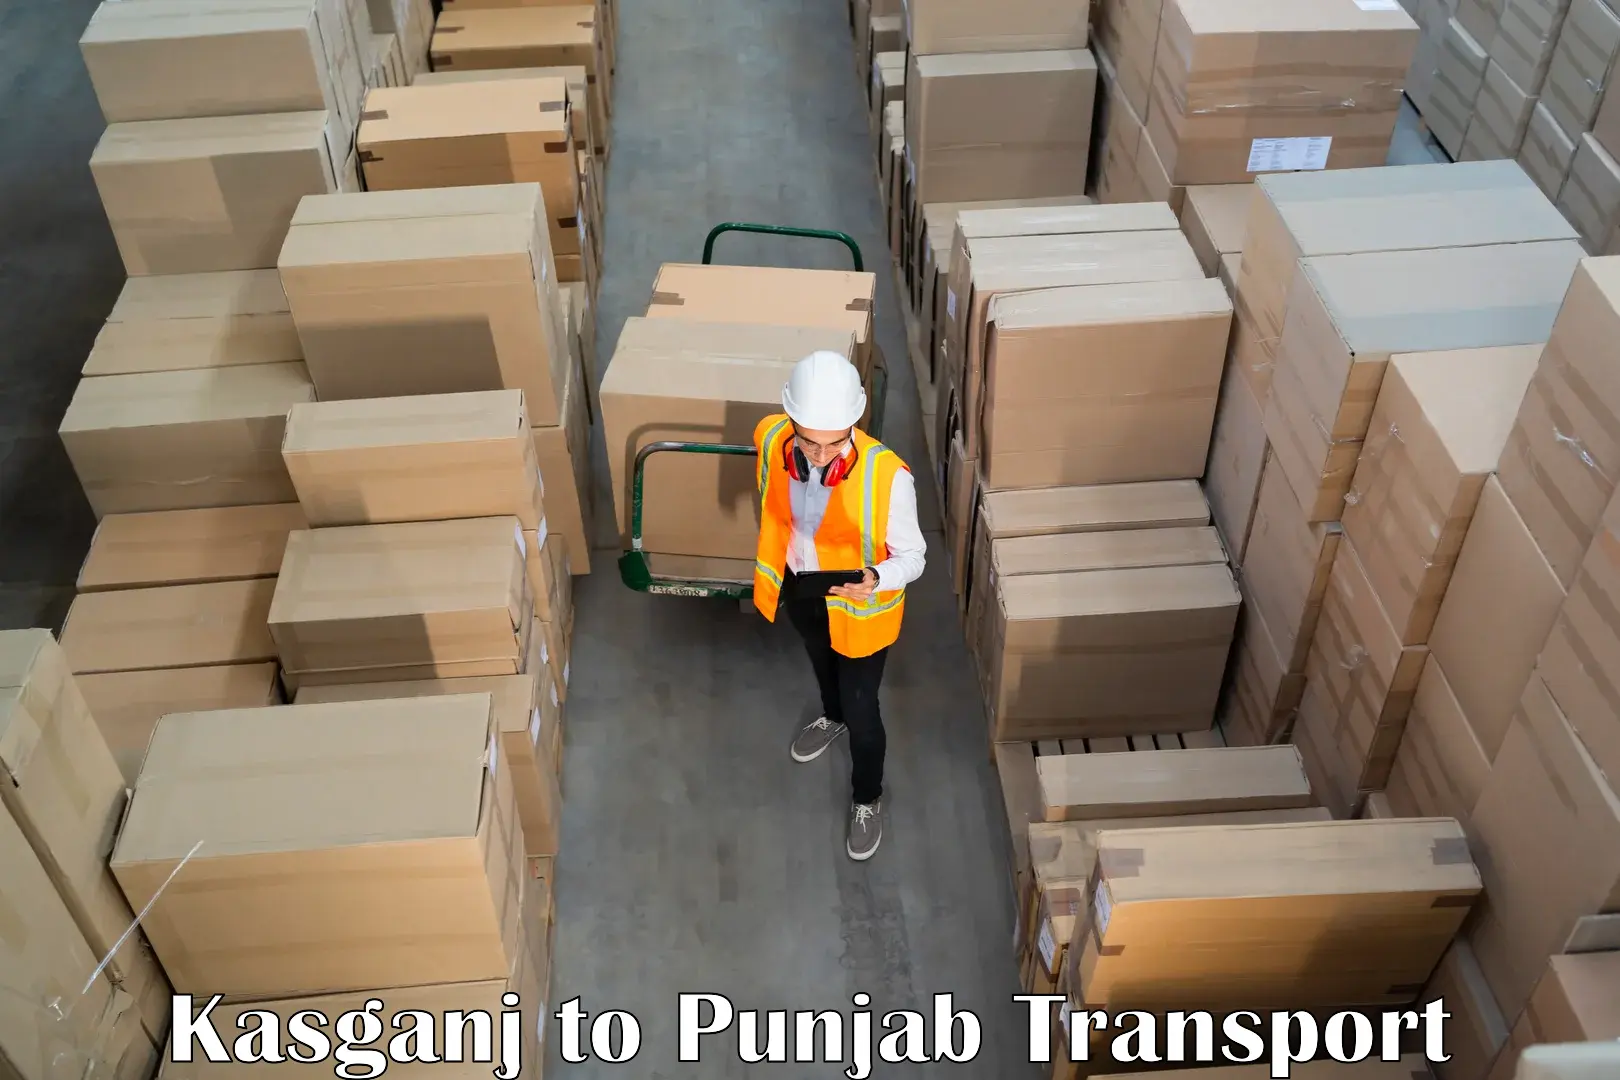 Truck transport companies in India Kasganj to Machhiwara